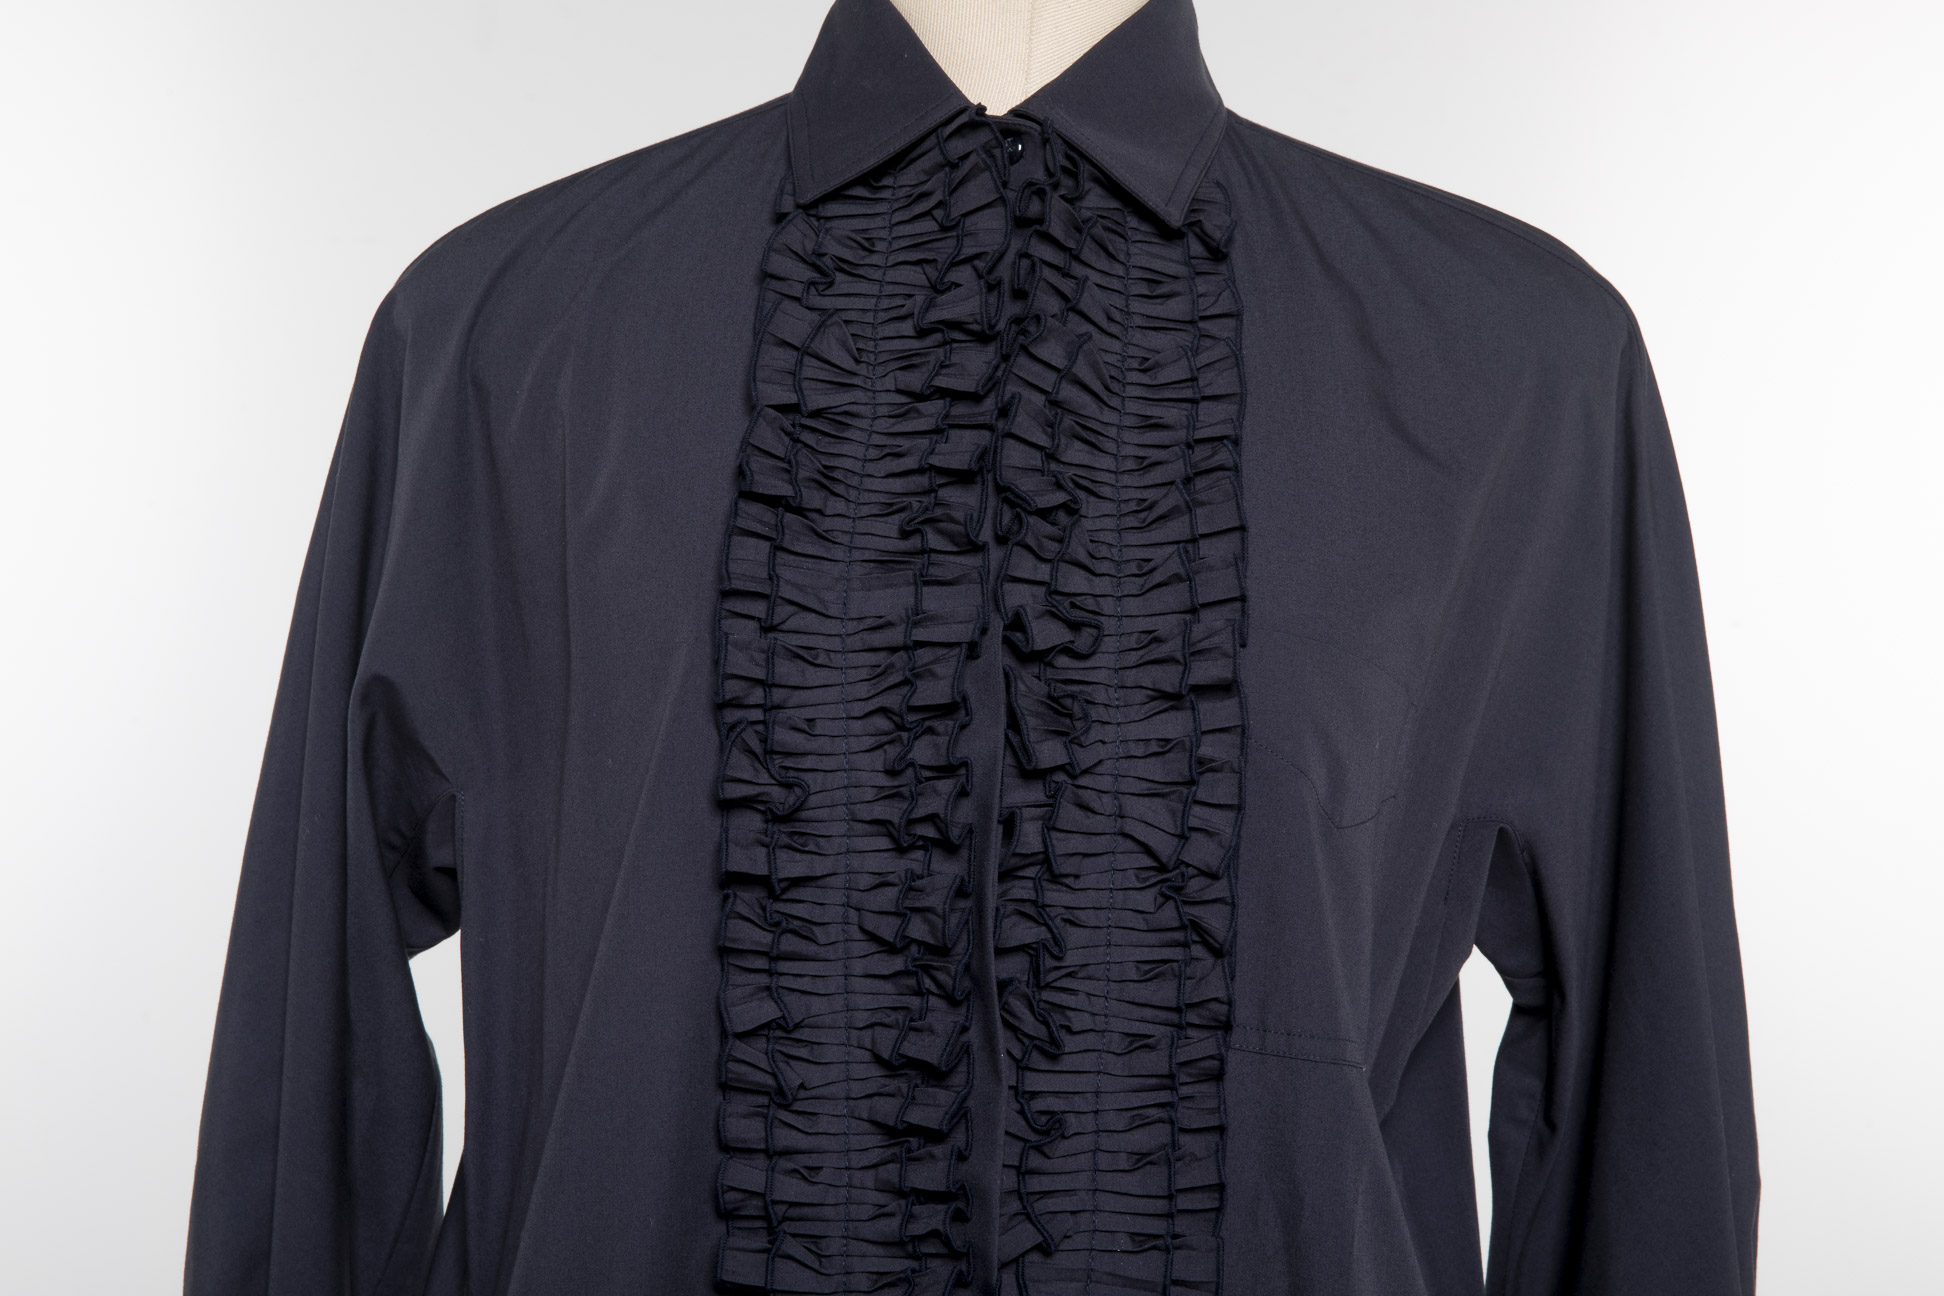 A MAX MARA 'SPEZIE' BLACK RUFFLED SHIRT DRESS - Image 2 of 3